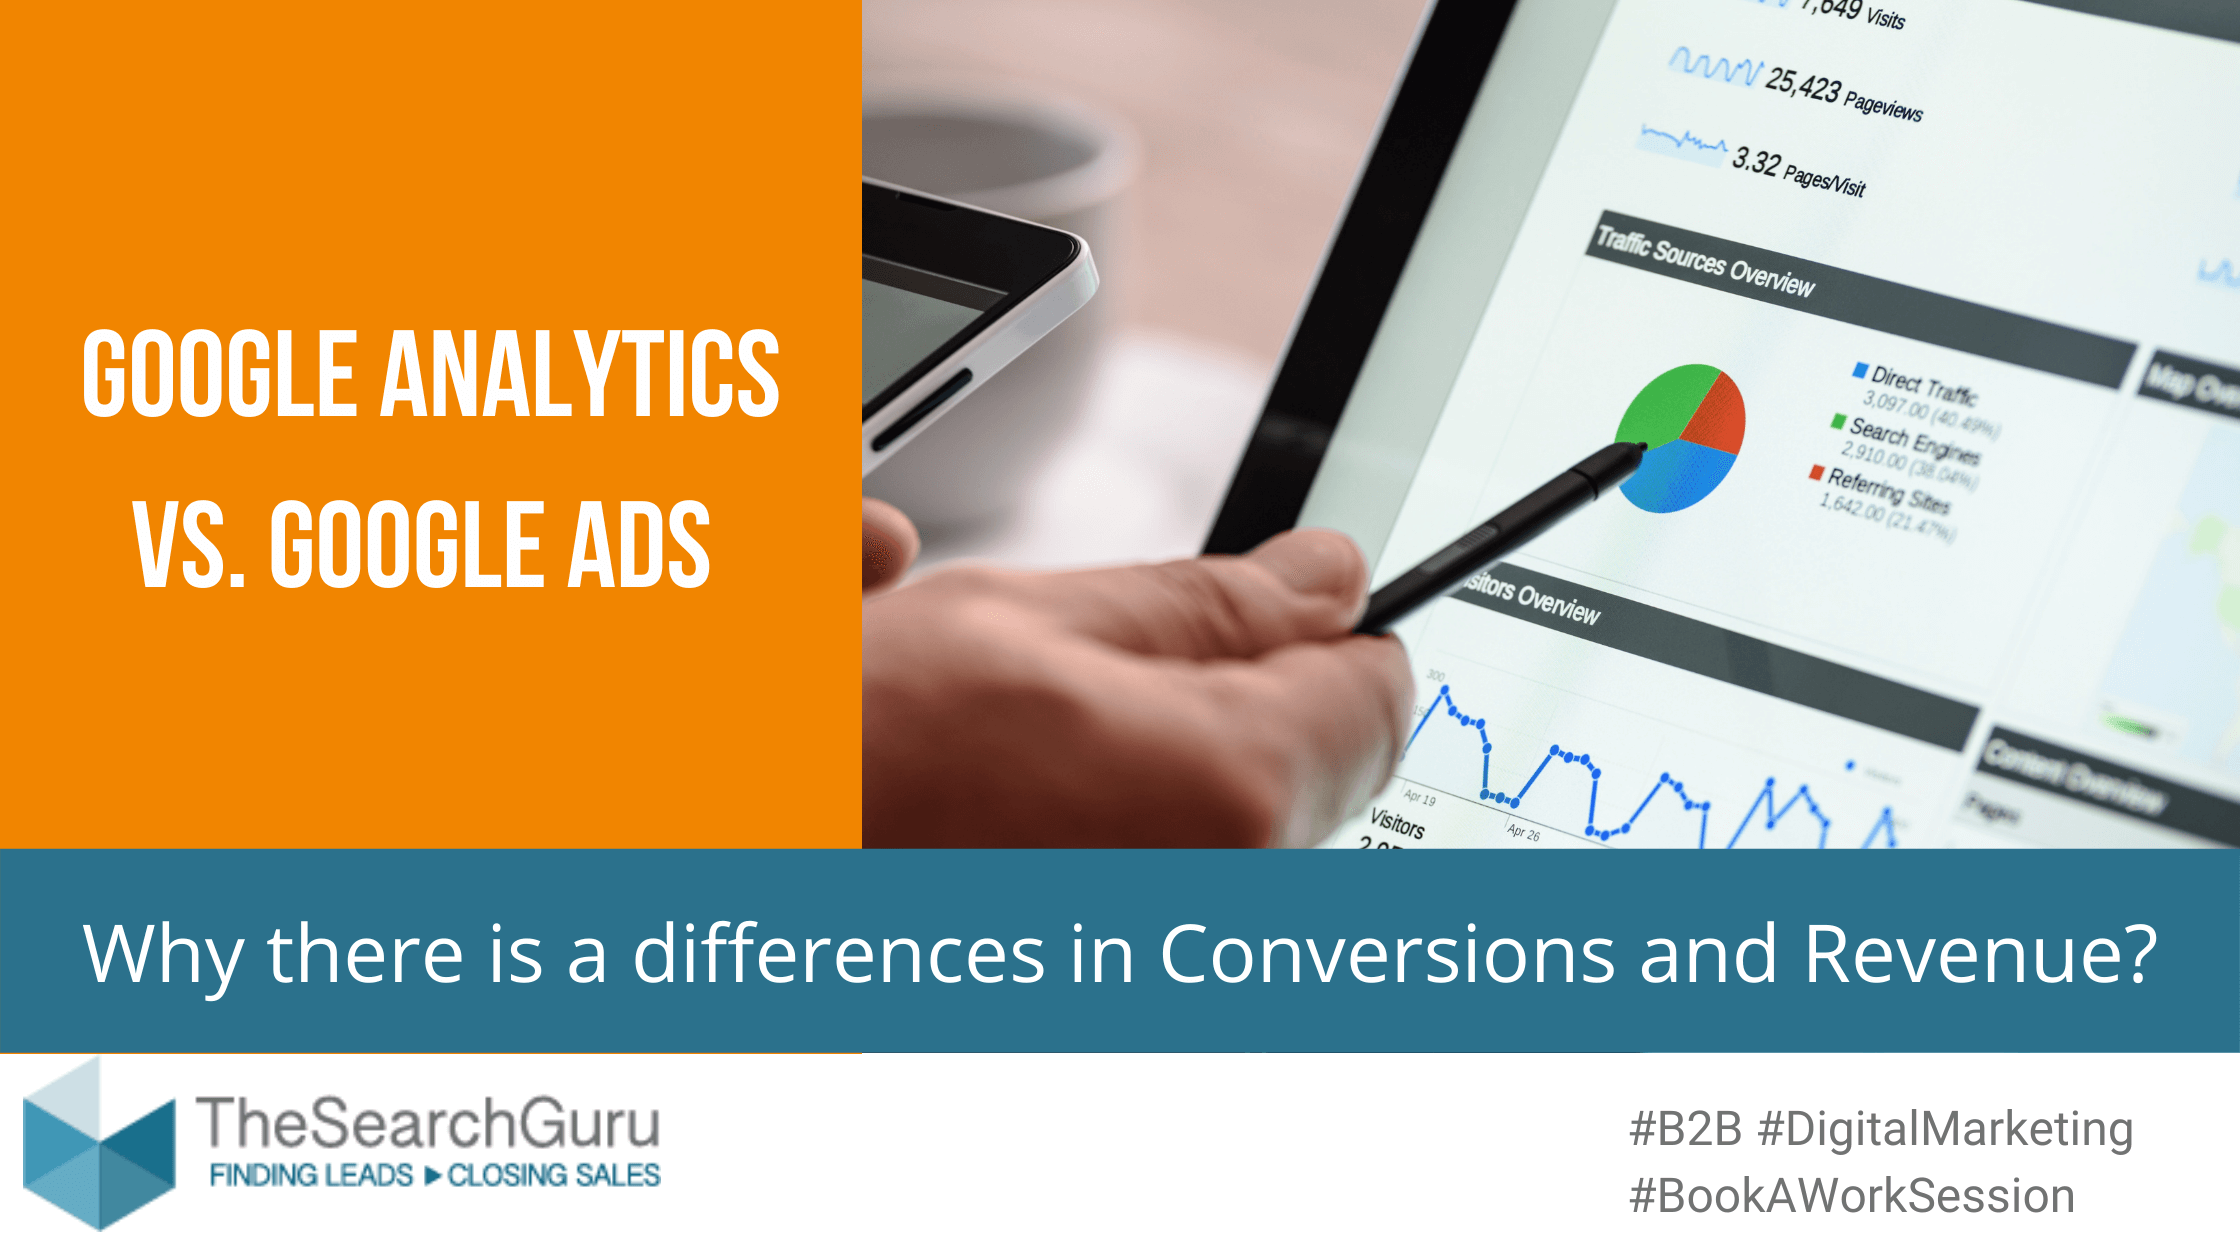 Google Analytics vs Google Ads Revenue and Conversions